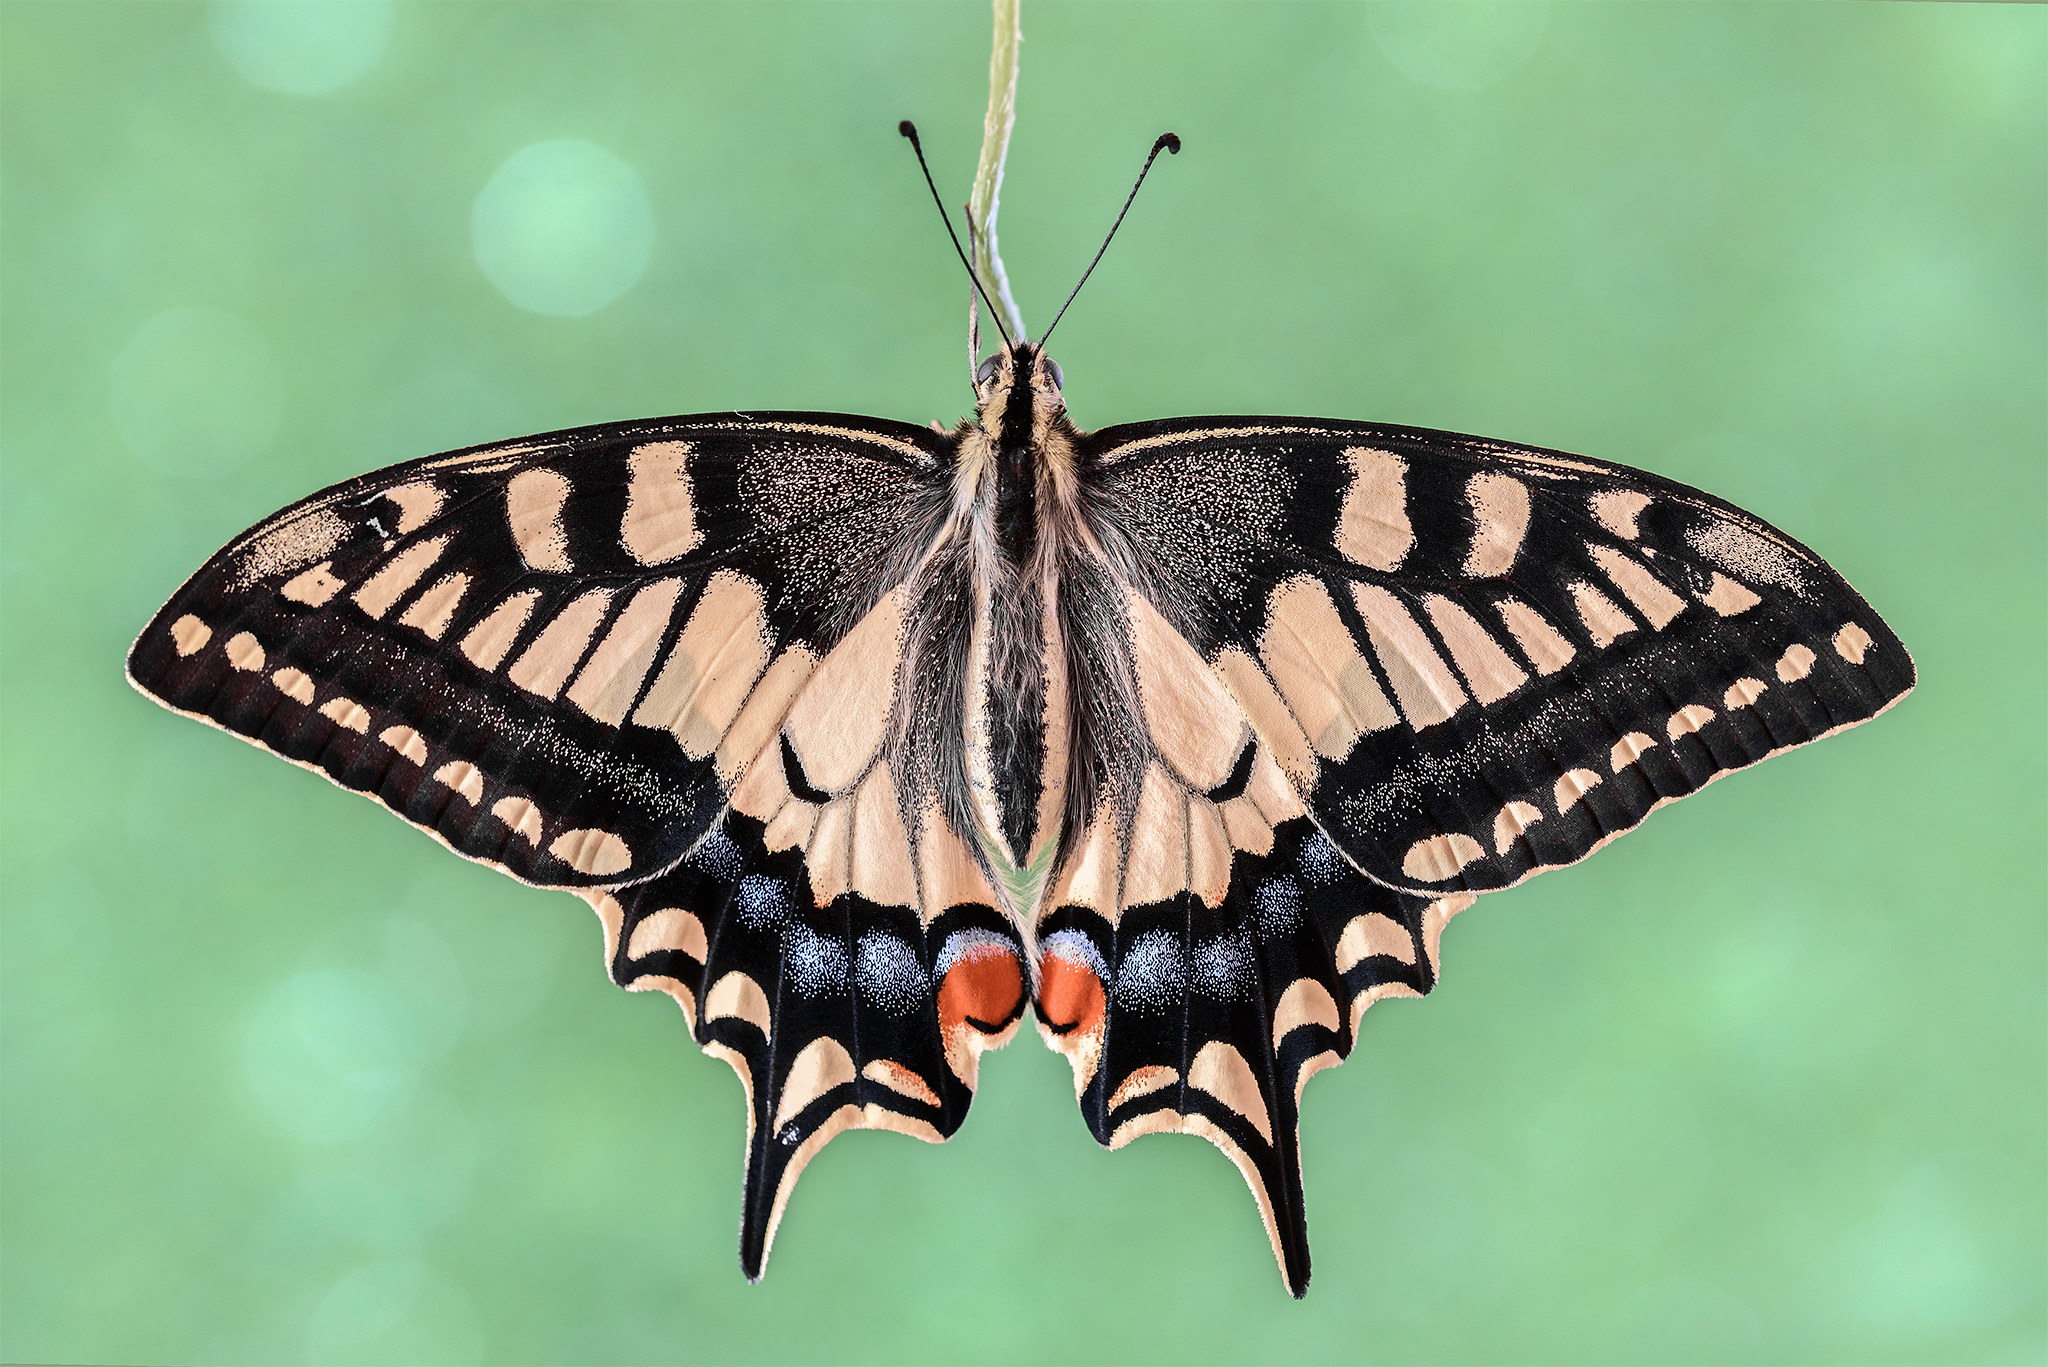 The Papilio machaon...